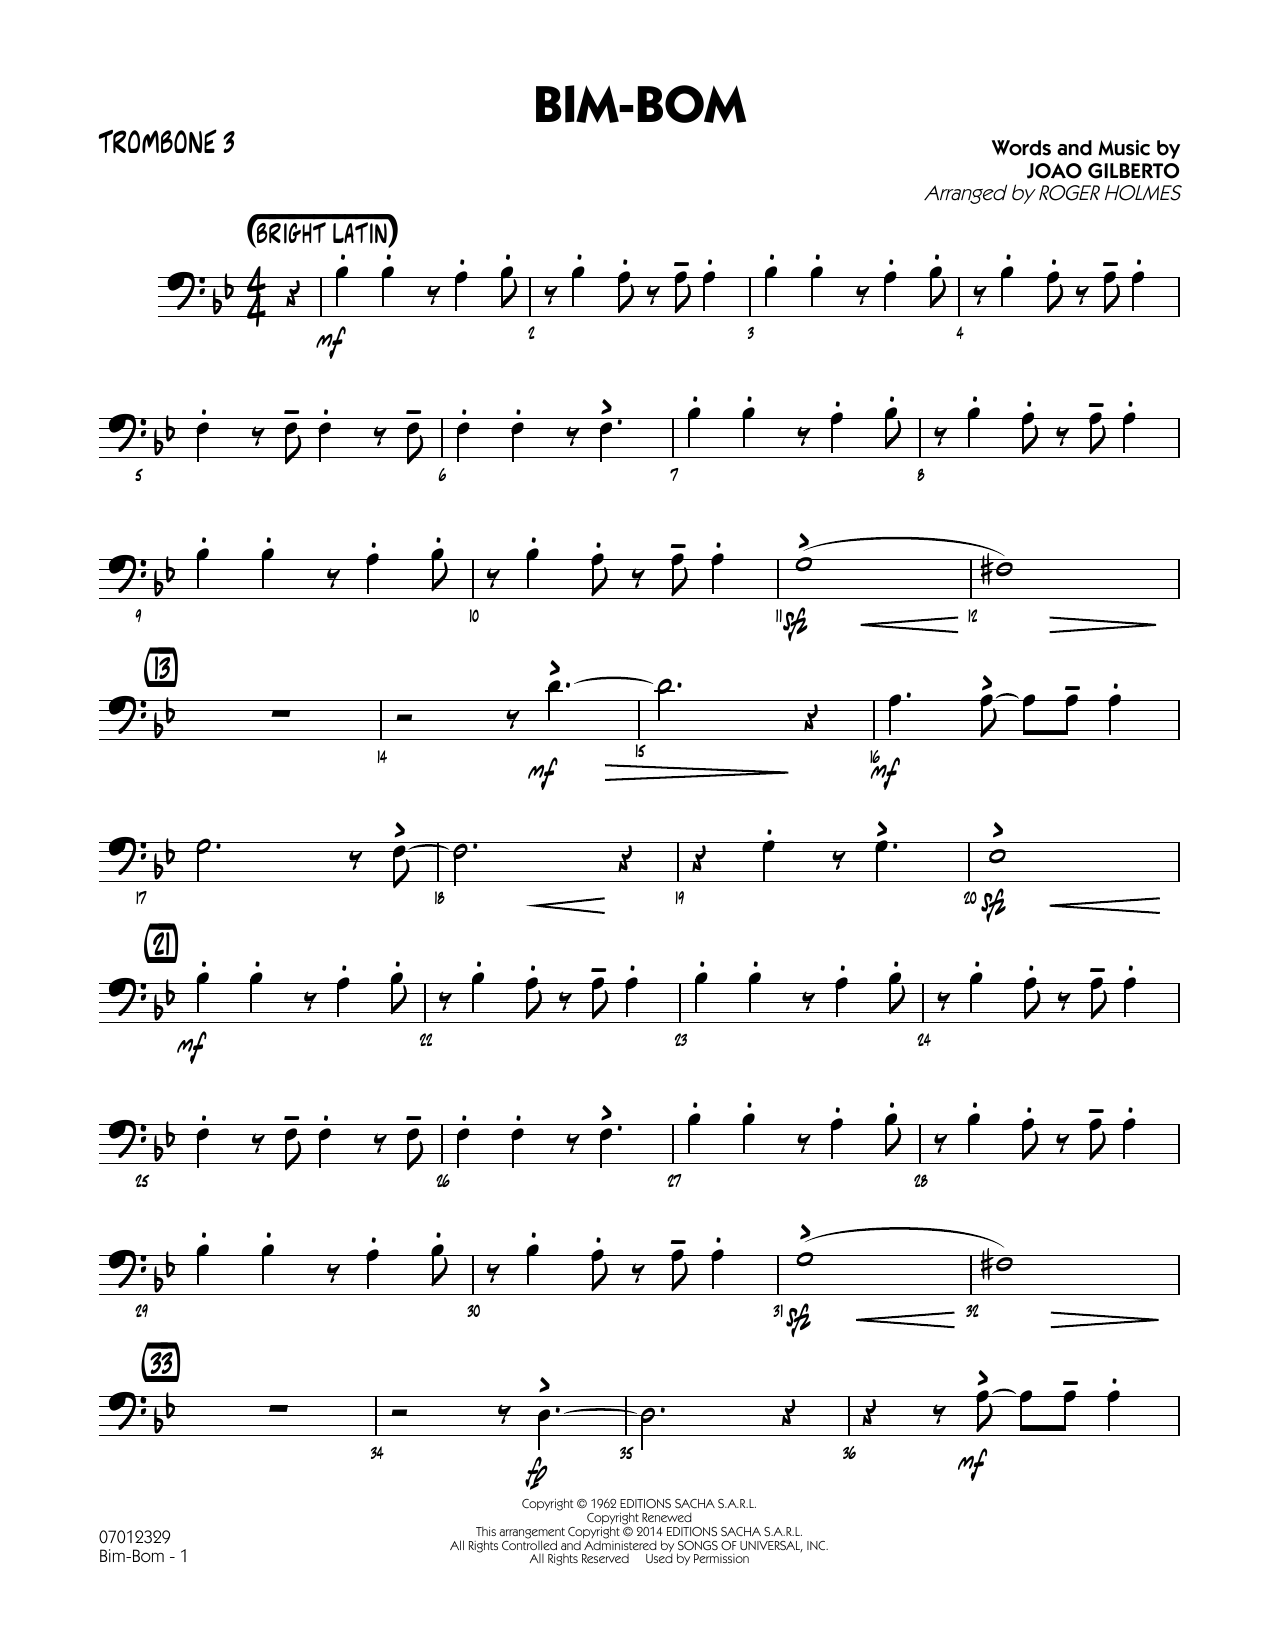 Roger Holmes Bim-Bom - Trombone 3 sheet music notes and chords. Download Printable PDF.